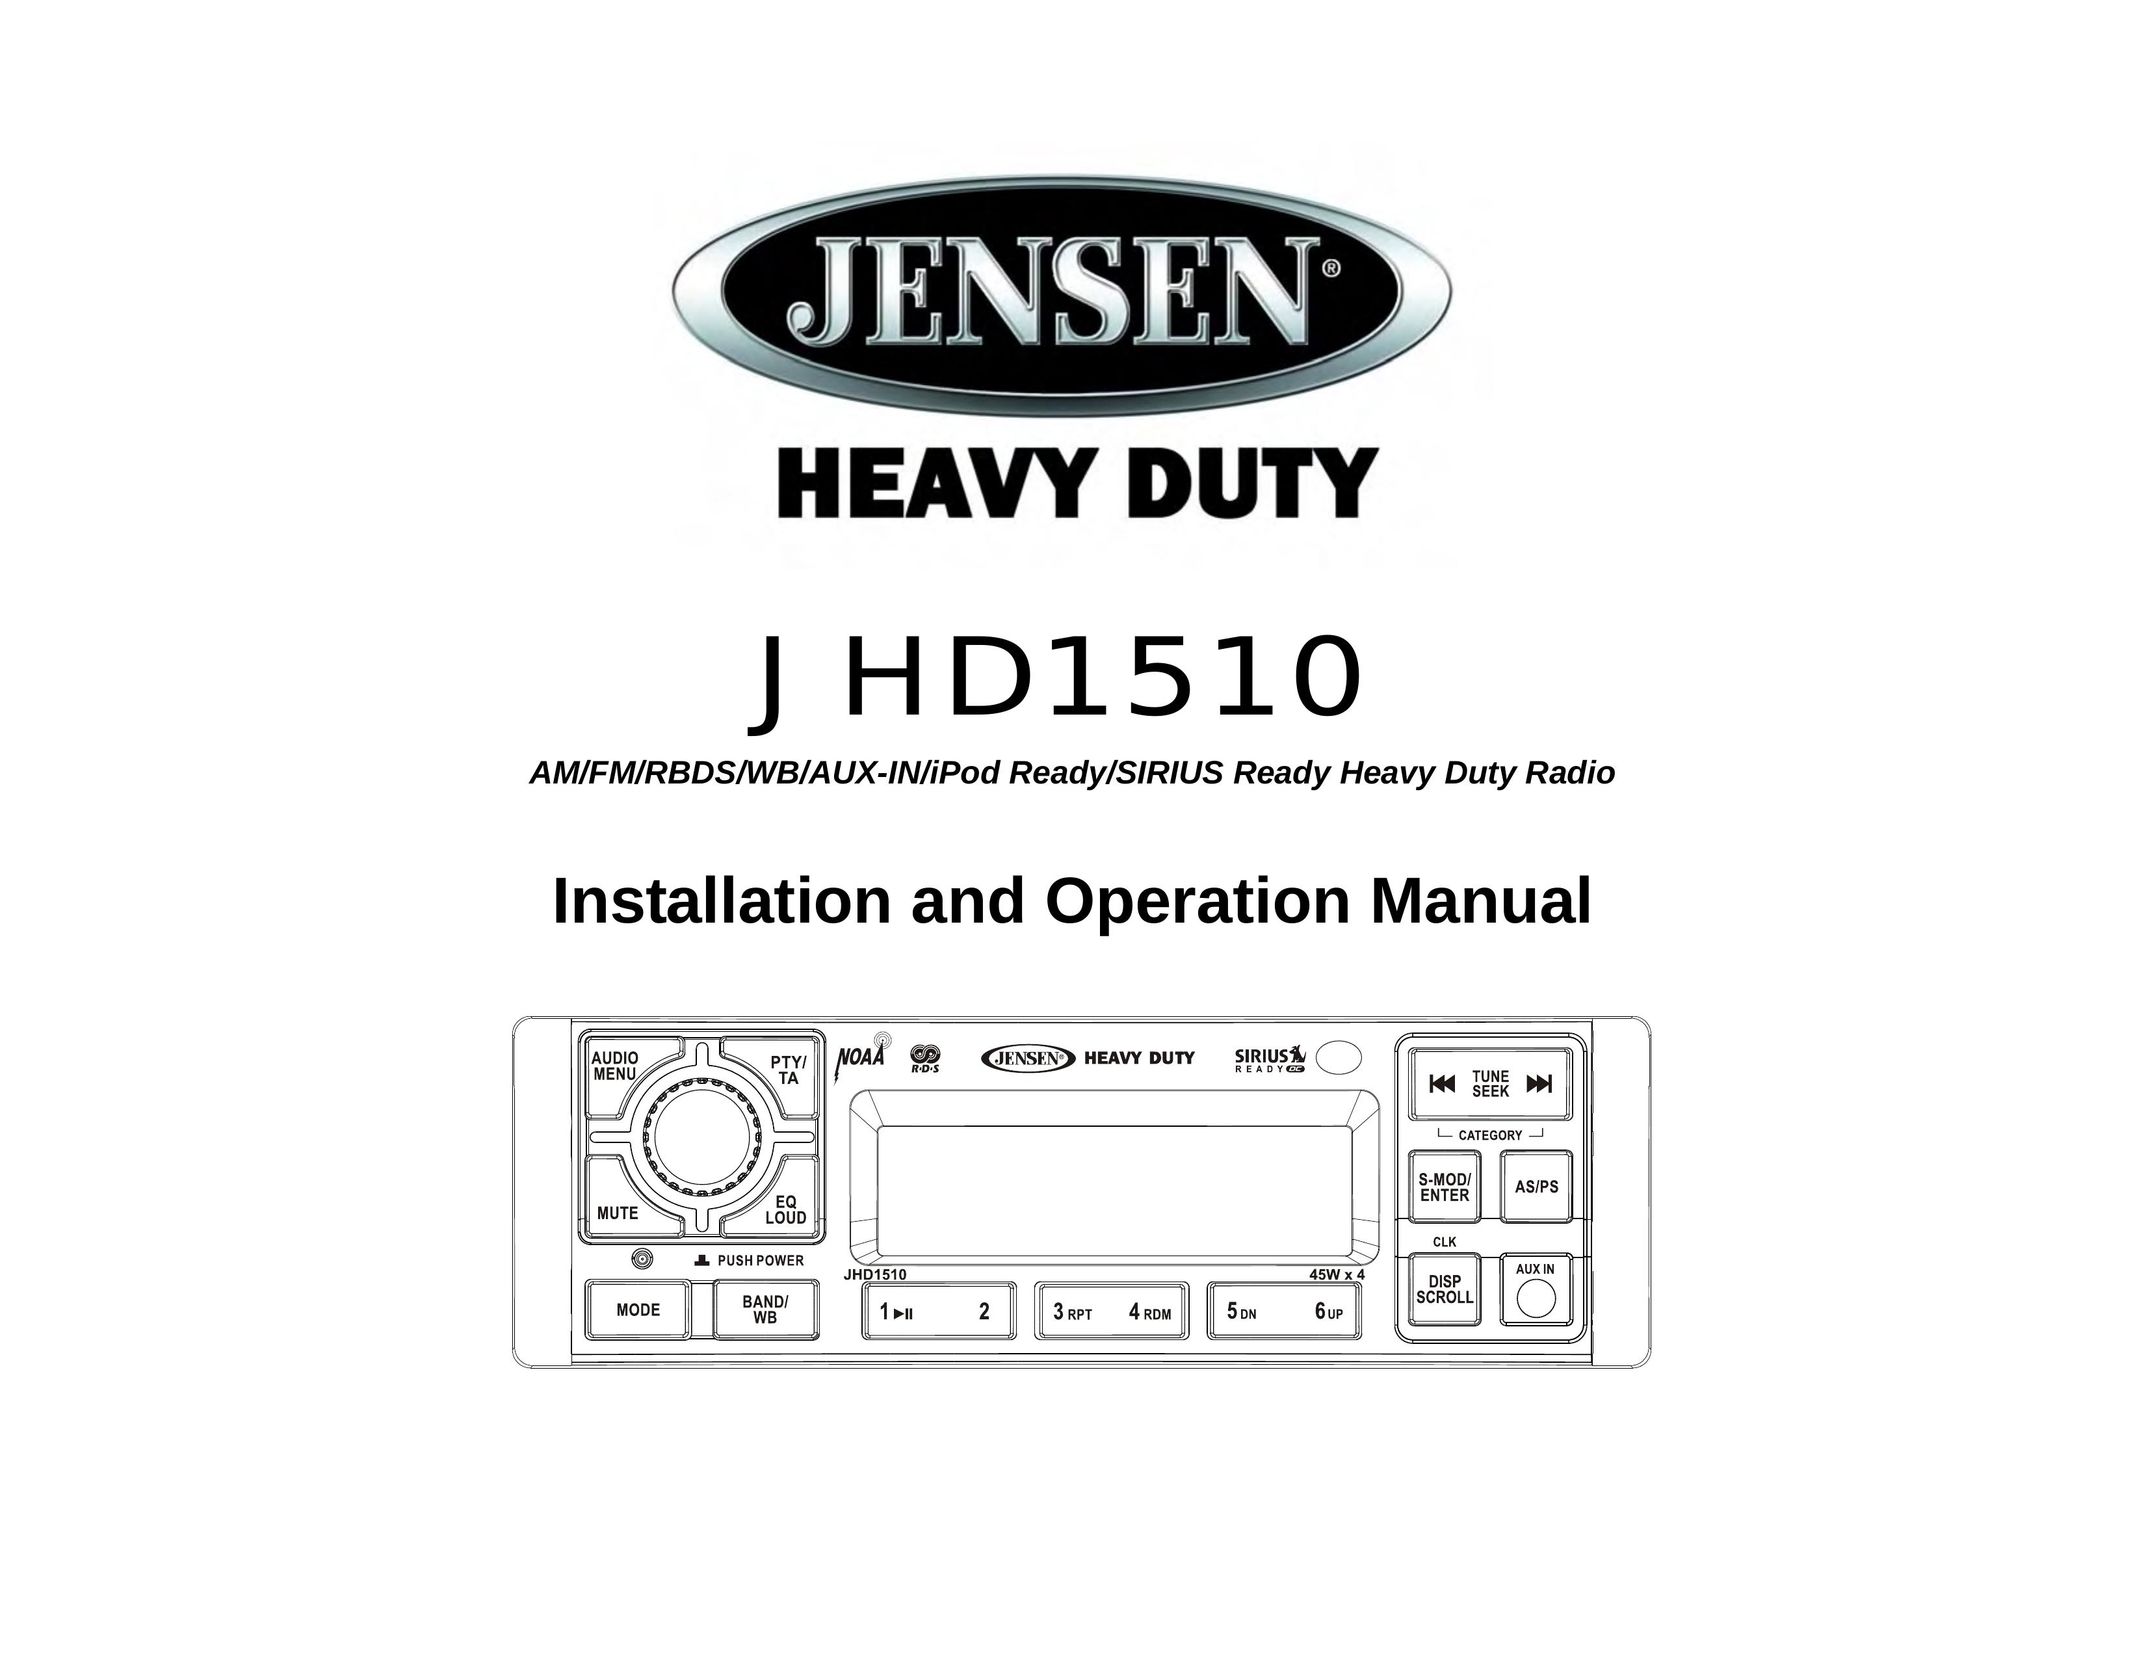 Jensen JHD1510 Car Stereo System User Manual